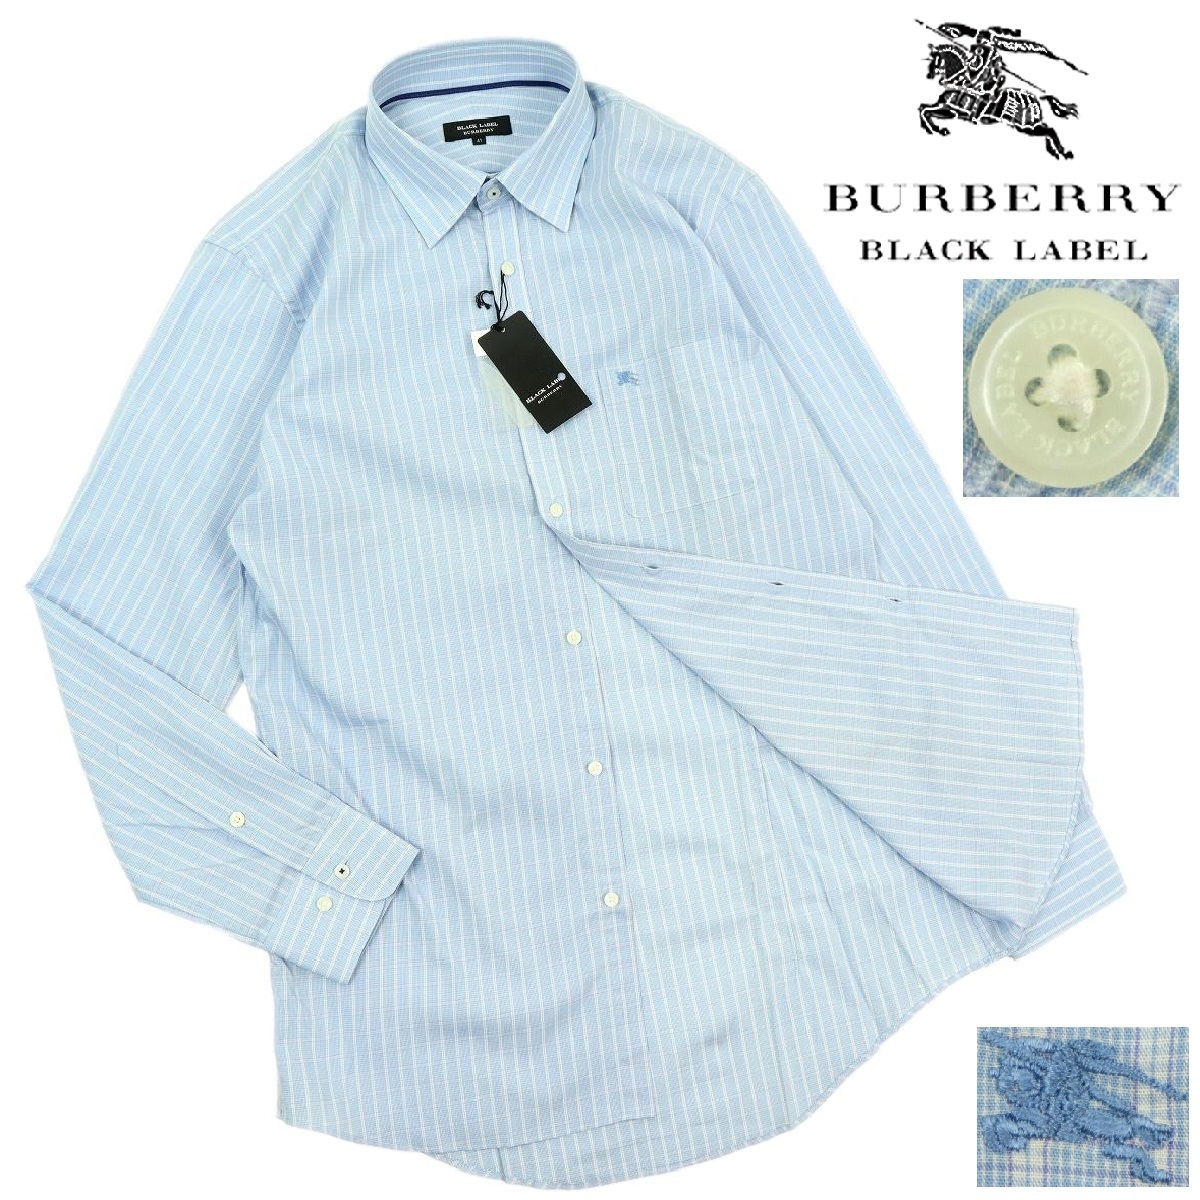 【B2334】【新品】BURBERRY BLACK LABEL バーバリーブラックレーベル 長袖シャツ ドレスシャツ ホース刺繍 ホースマーク ノバチェック 41